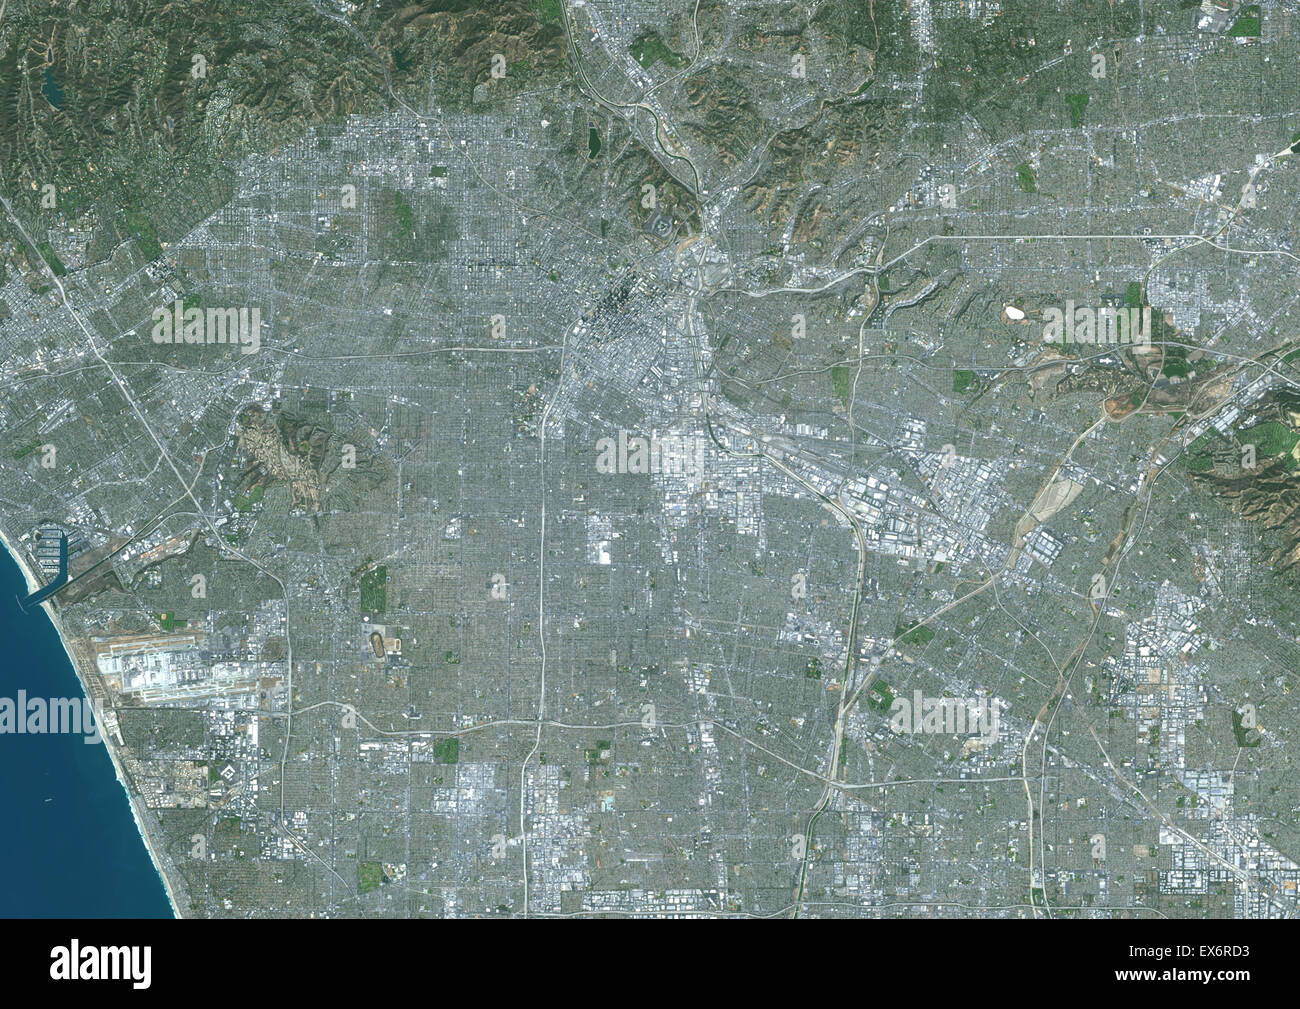 Colour satellite image of Los Angeles, California, USA. Image taken on October 23, 2014 with Landsat 8 data. Stock Photo